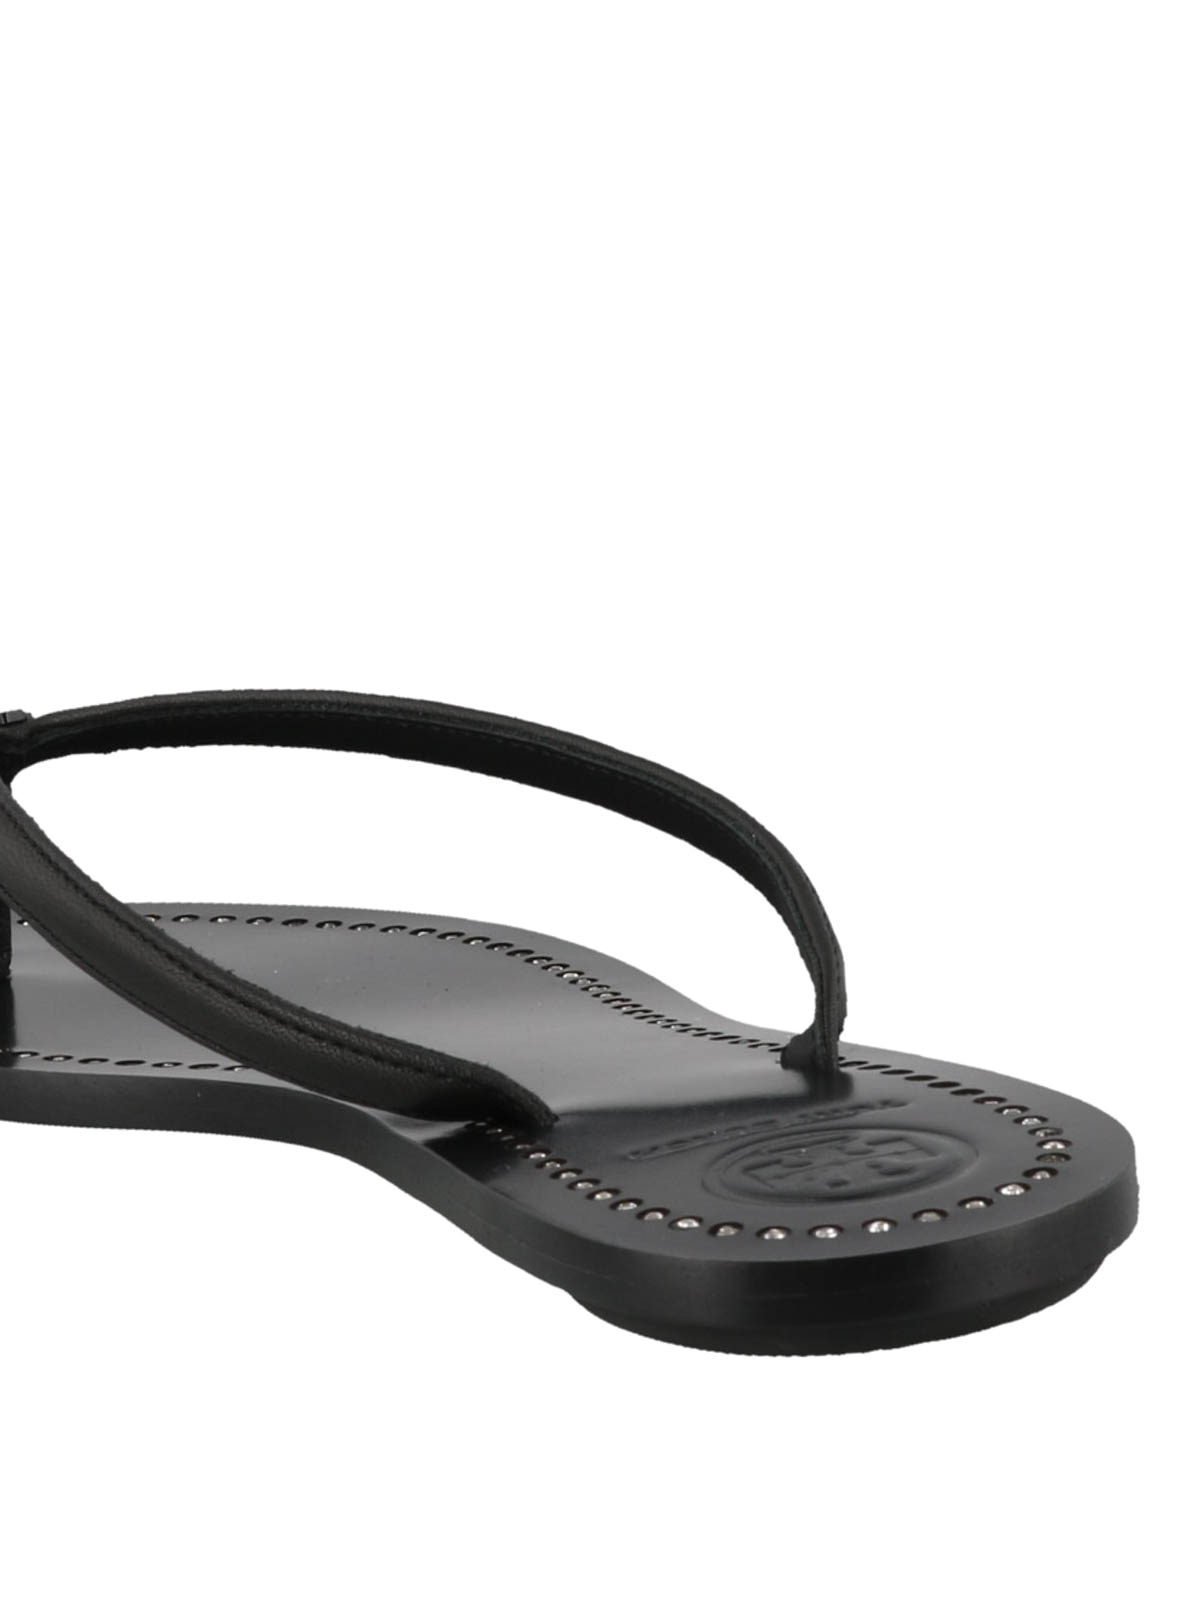 Sandals Tory Burch - Crystal embellished black thong sandals - 53036006